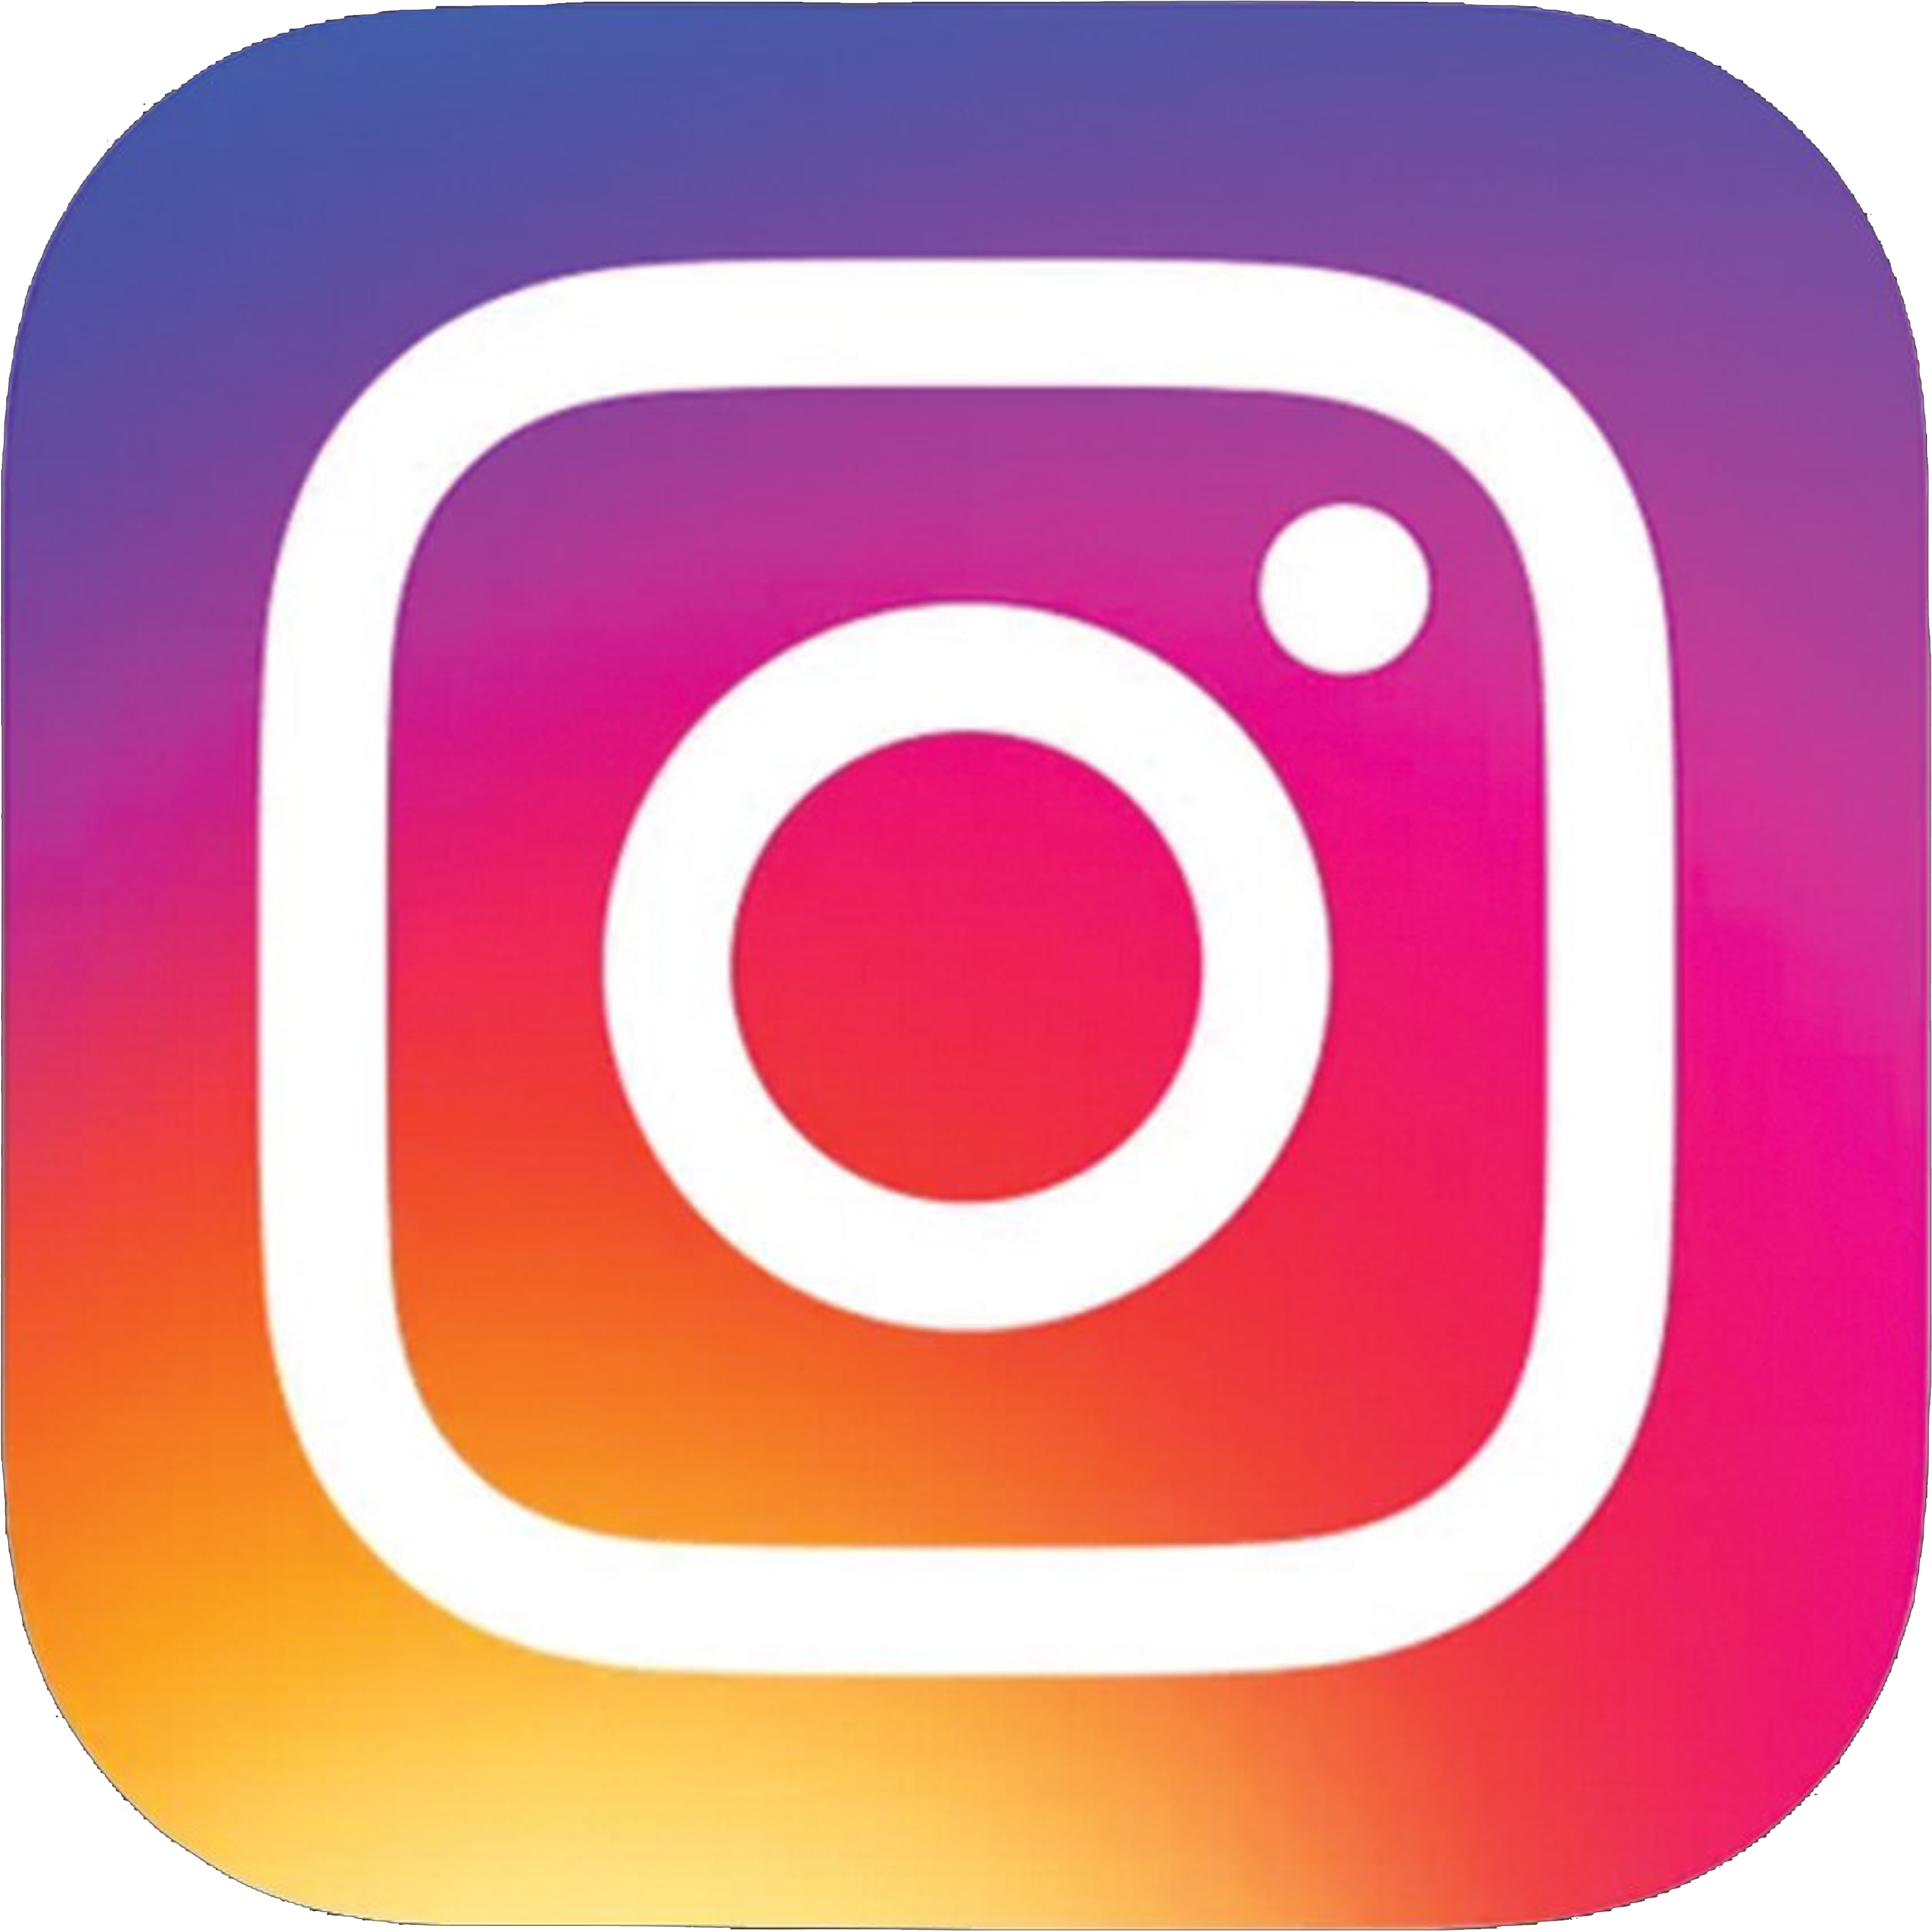 Download Instagram Vector Png Instagram Logo Png Free Download Png Image With No Background Pngkey Com